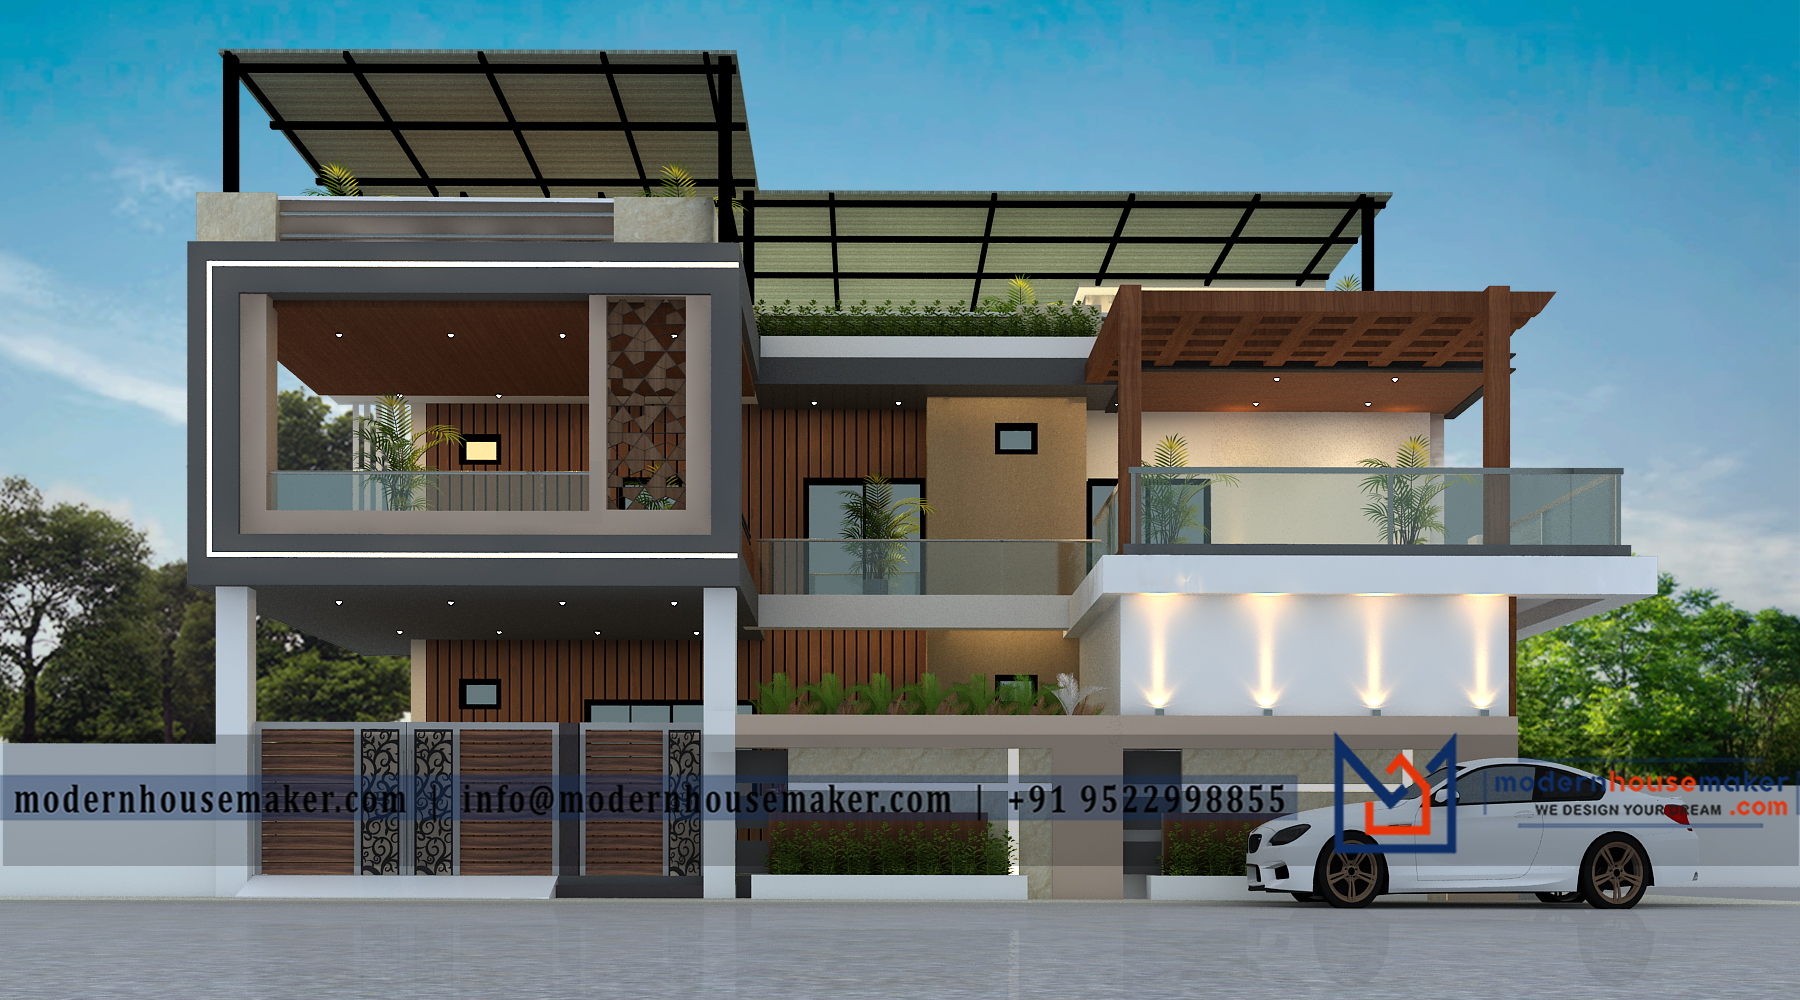 57x57 Elevation Design Indore - 57*57 House Plan India